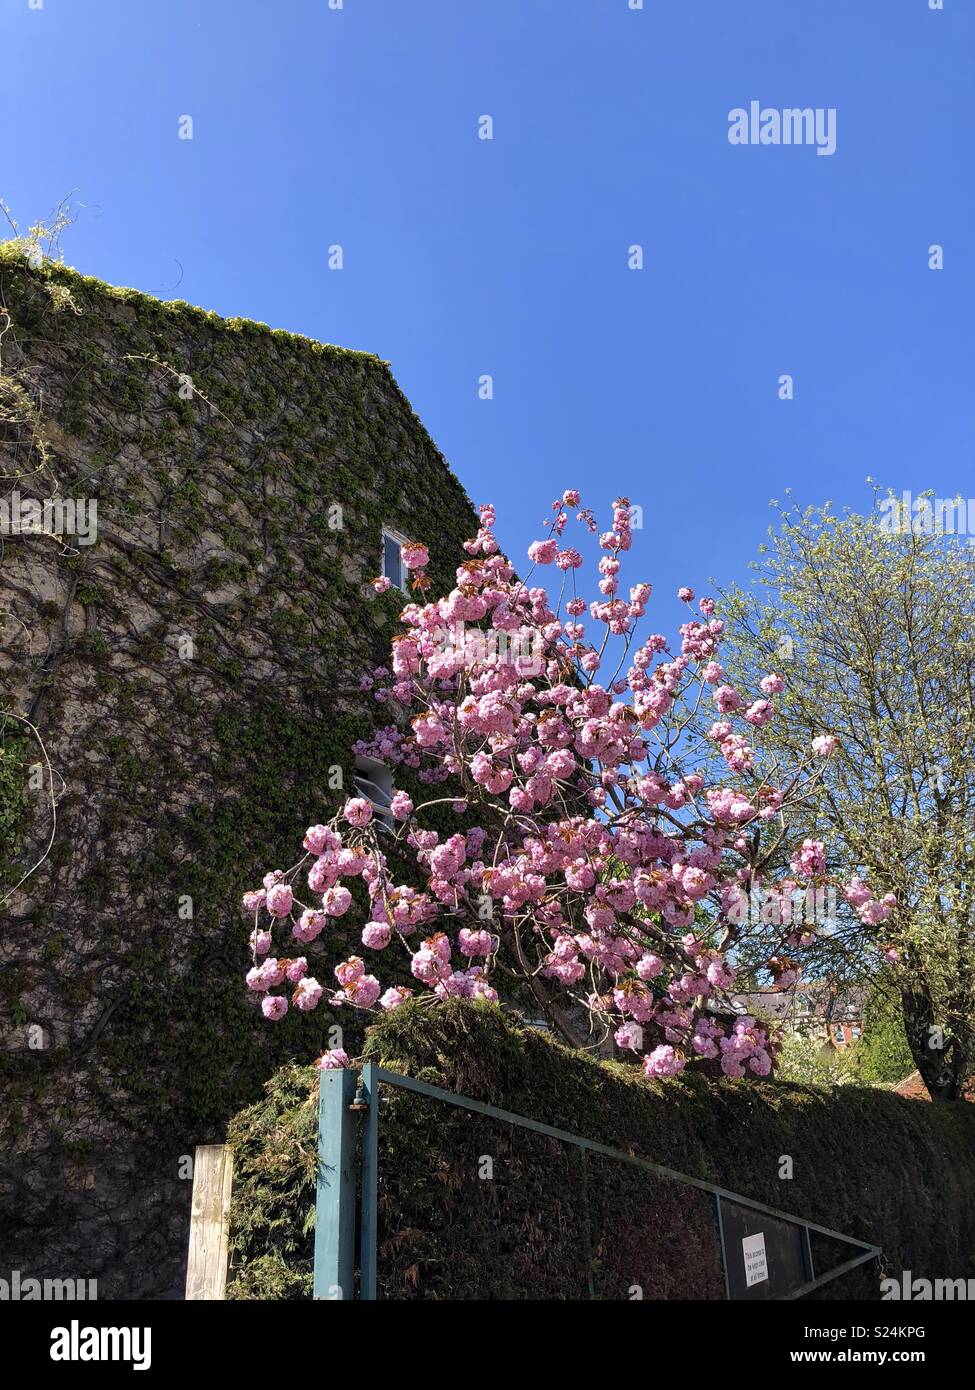 Blossom tree in full bloom Stock Photo